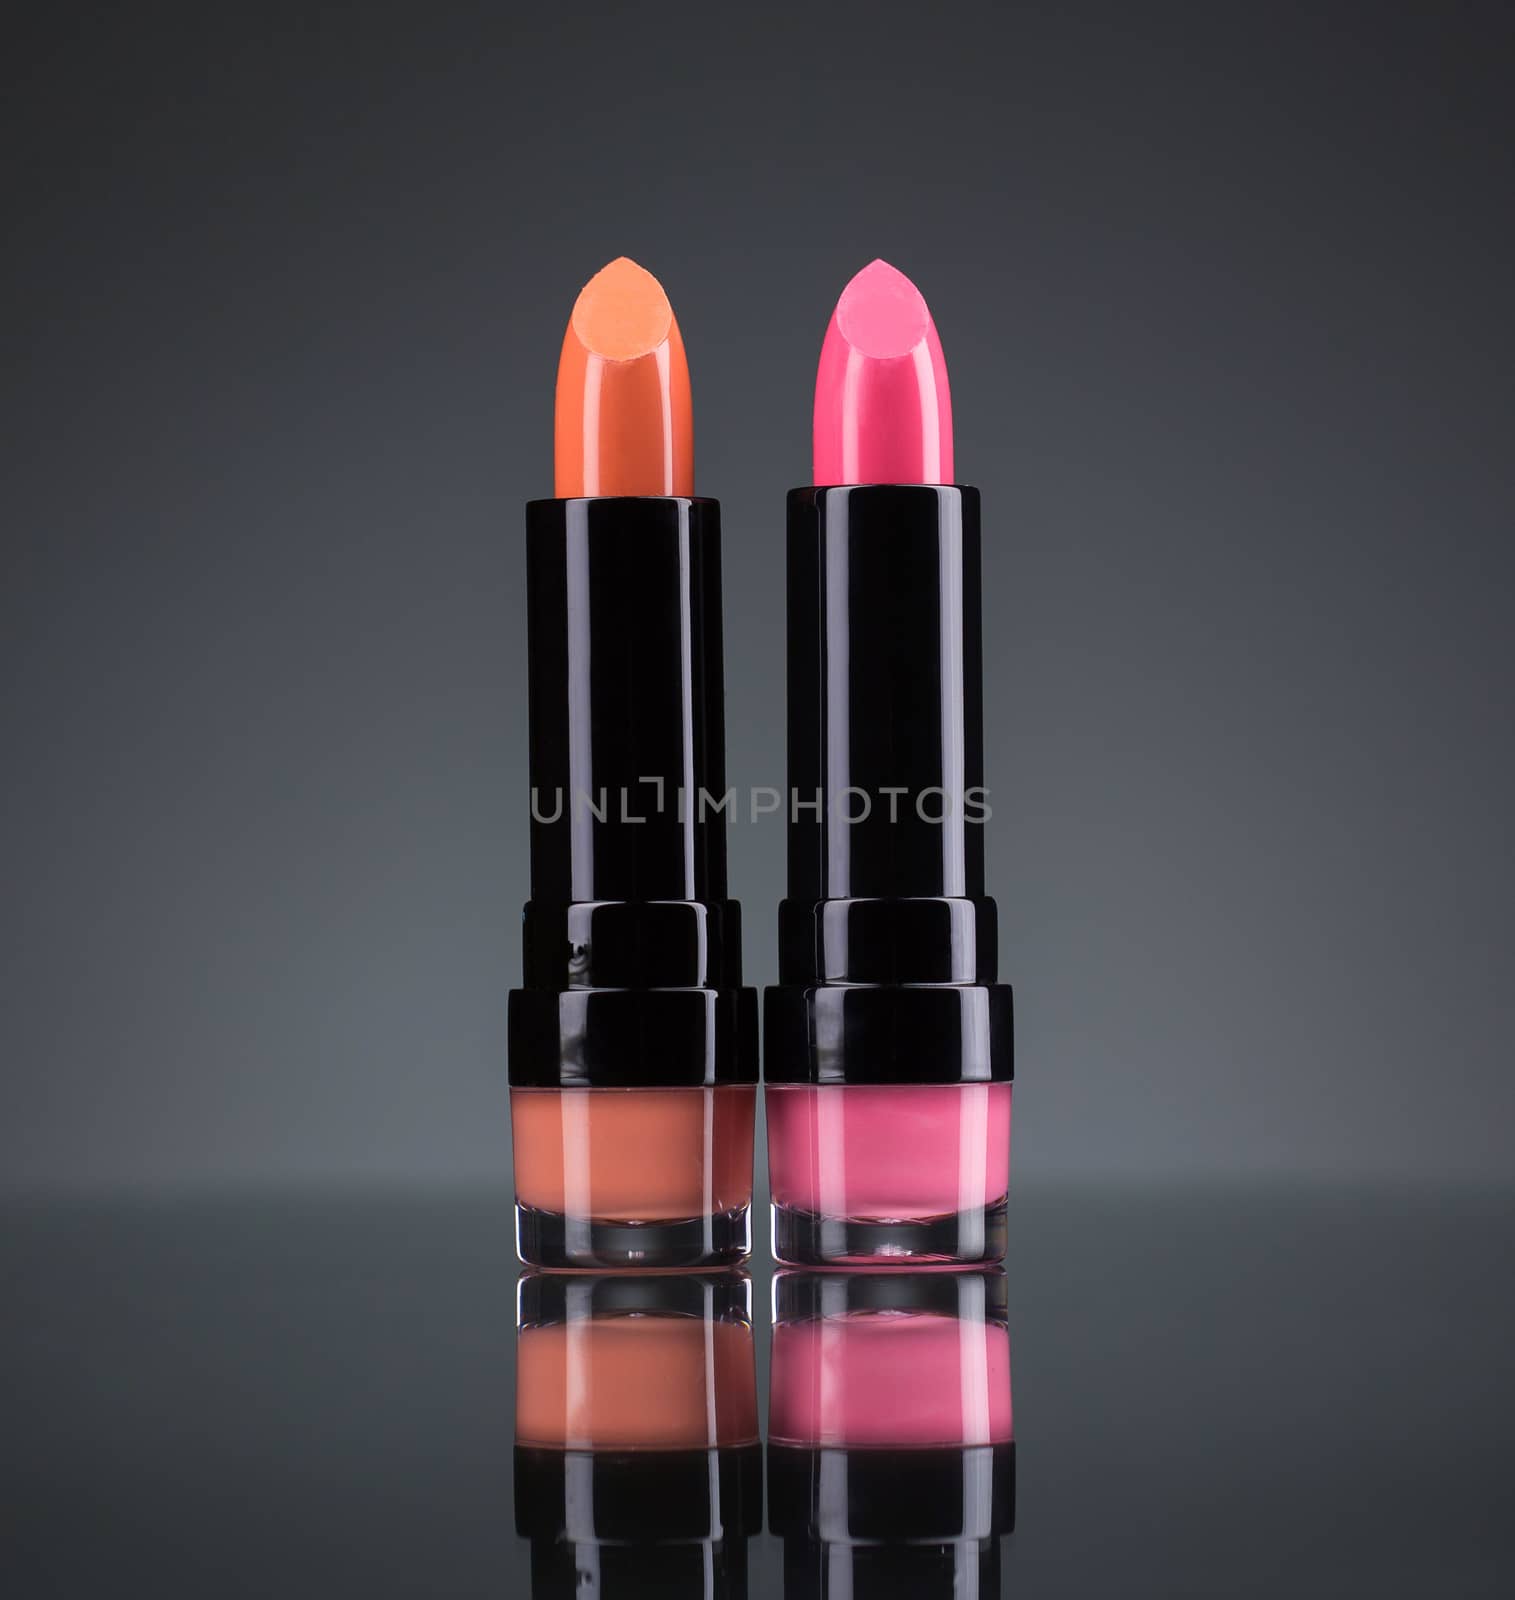 Two bright lipsticks on a black by vlad_star